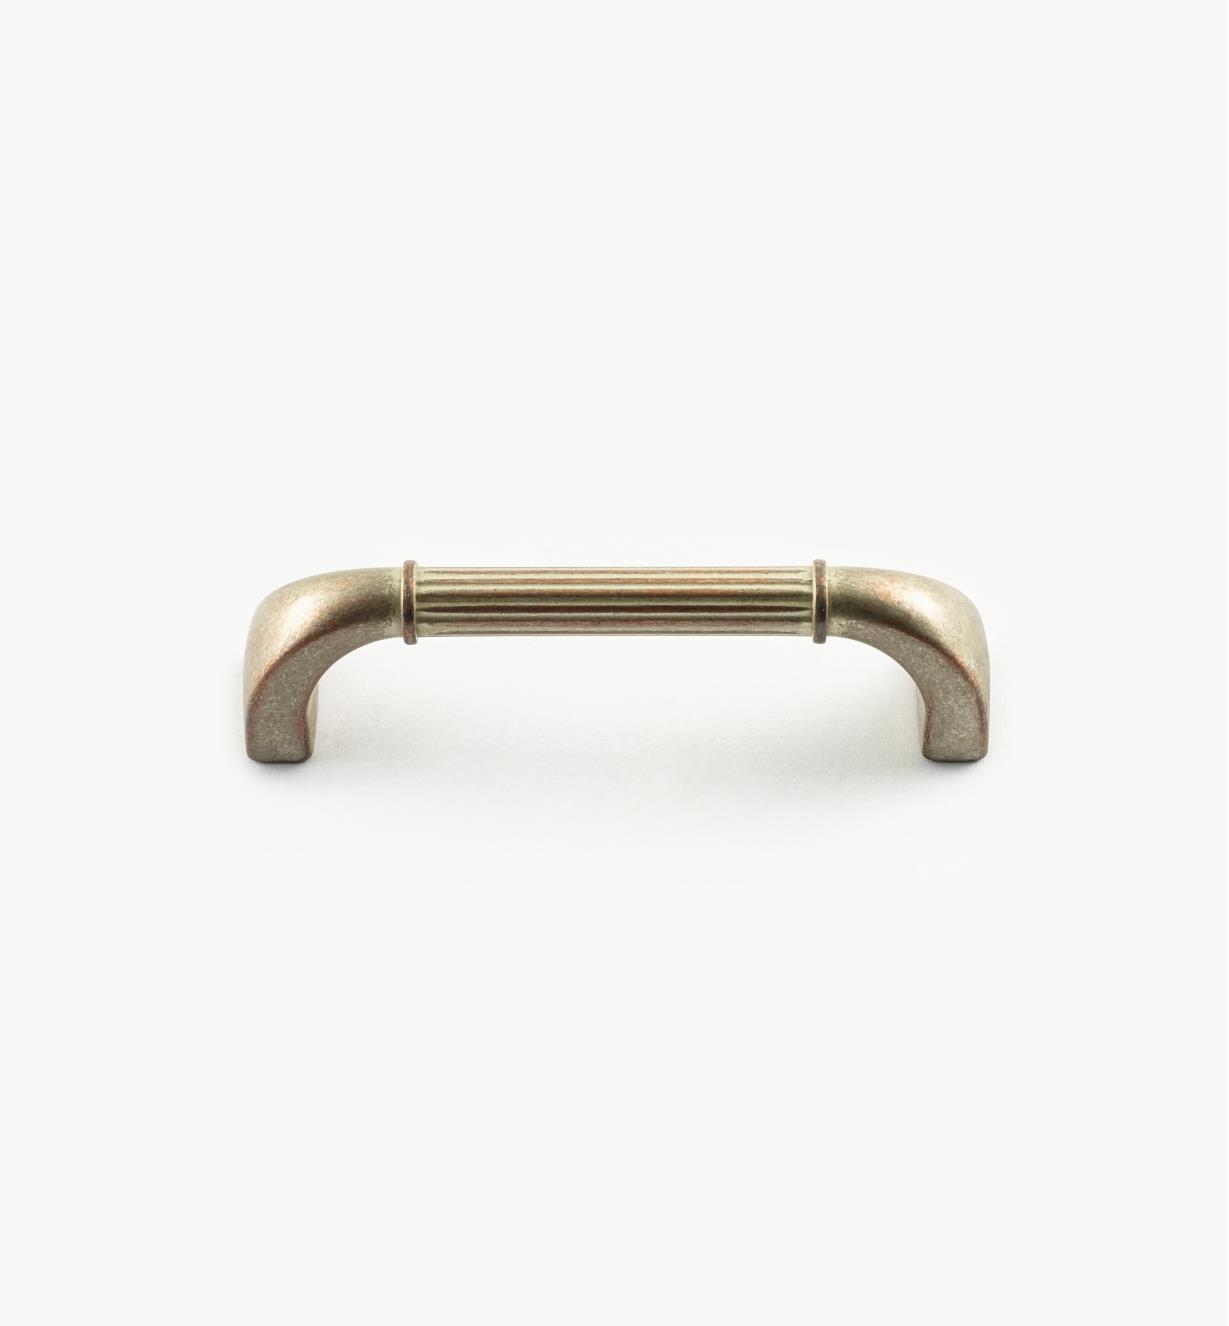 02A1422 - Poignée arquée à cannelure de 96 mm, série Galleria, fini nickel-cuivre vieilli